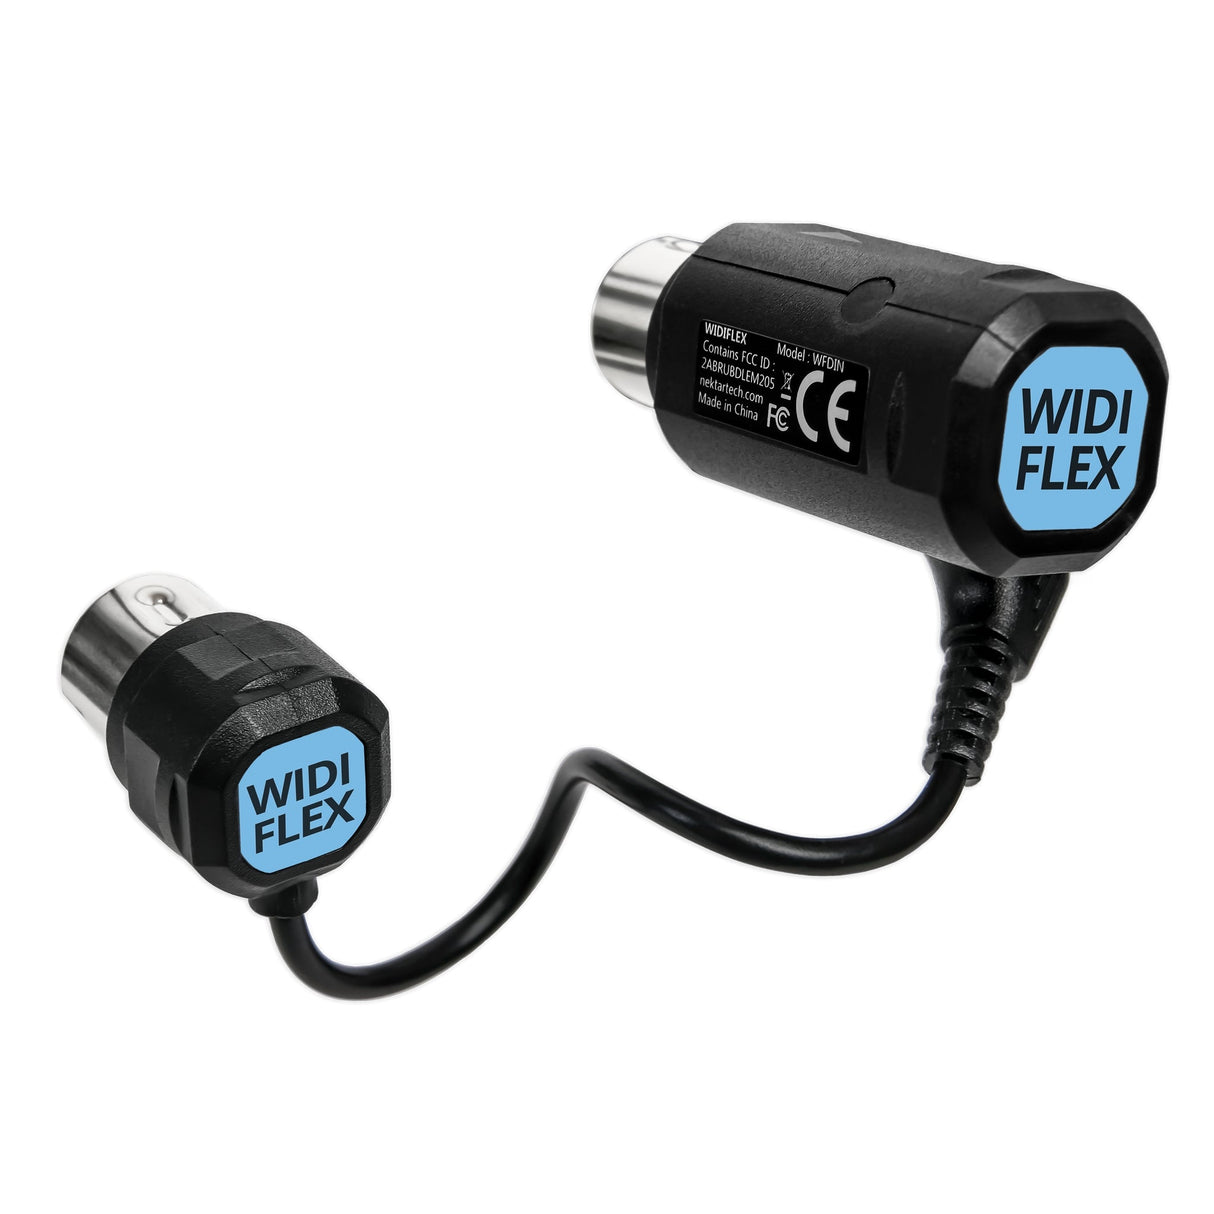 Nektar WIDIFLEX Bluetooth Adapter for MIDI Devices